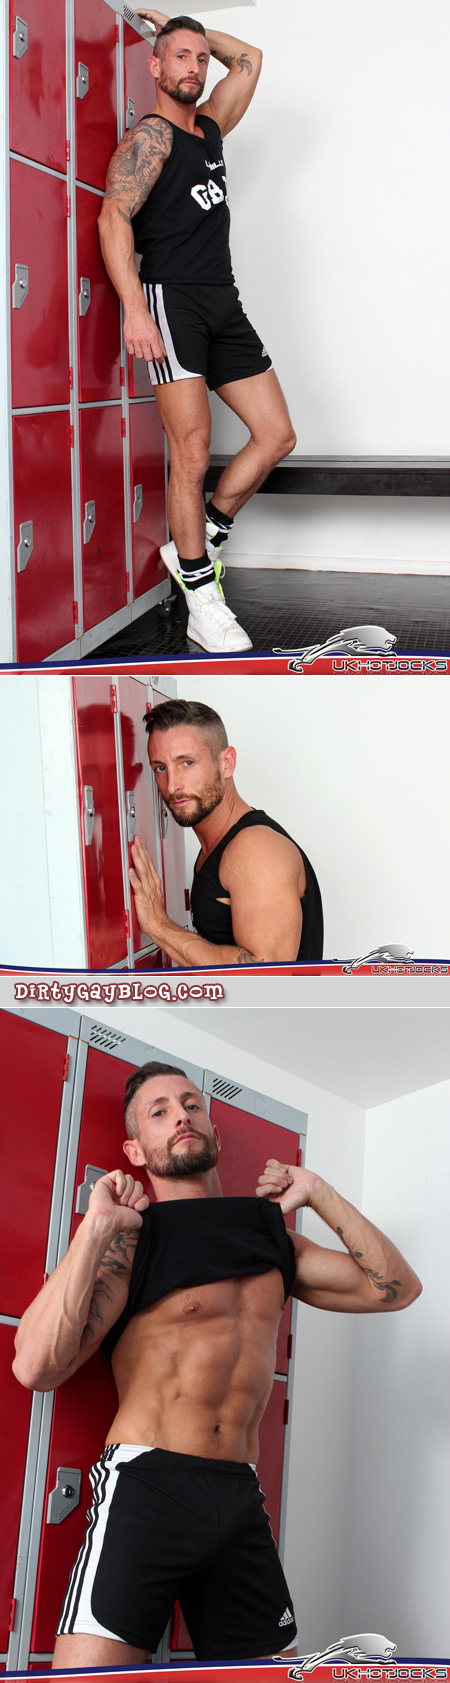 Hunky muscle guy in athletic gear in the locker room.